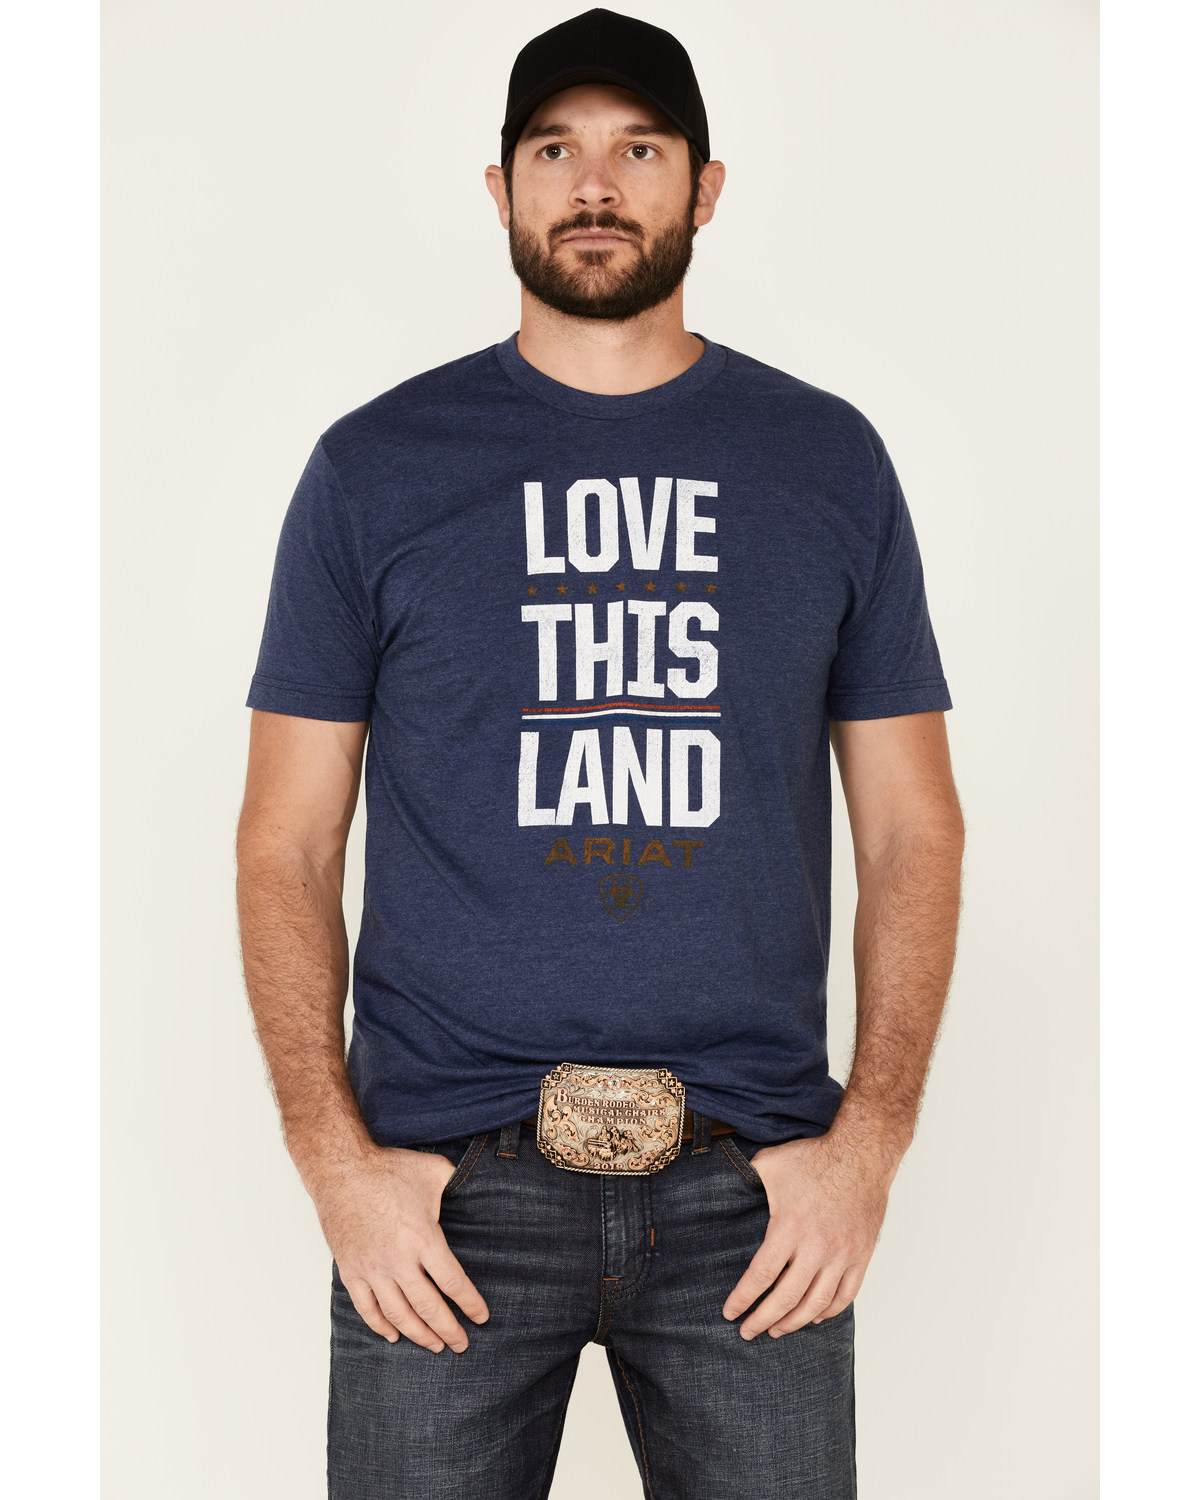 Ariat Men's Navy Love This Land Graphic Short Sleeve T-Shirt